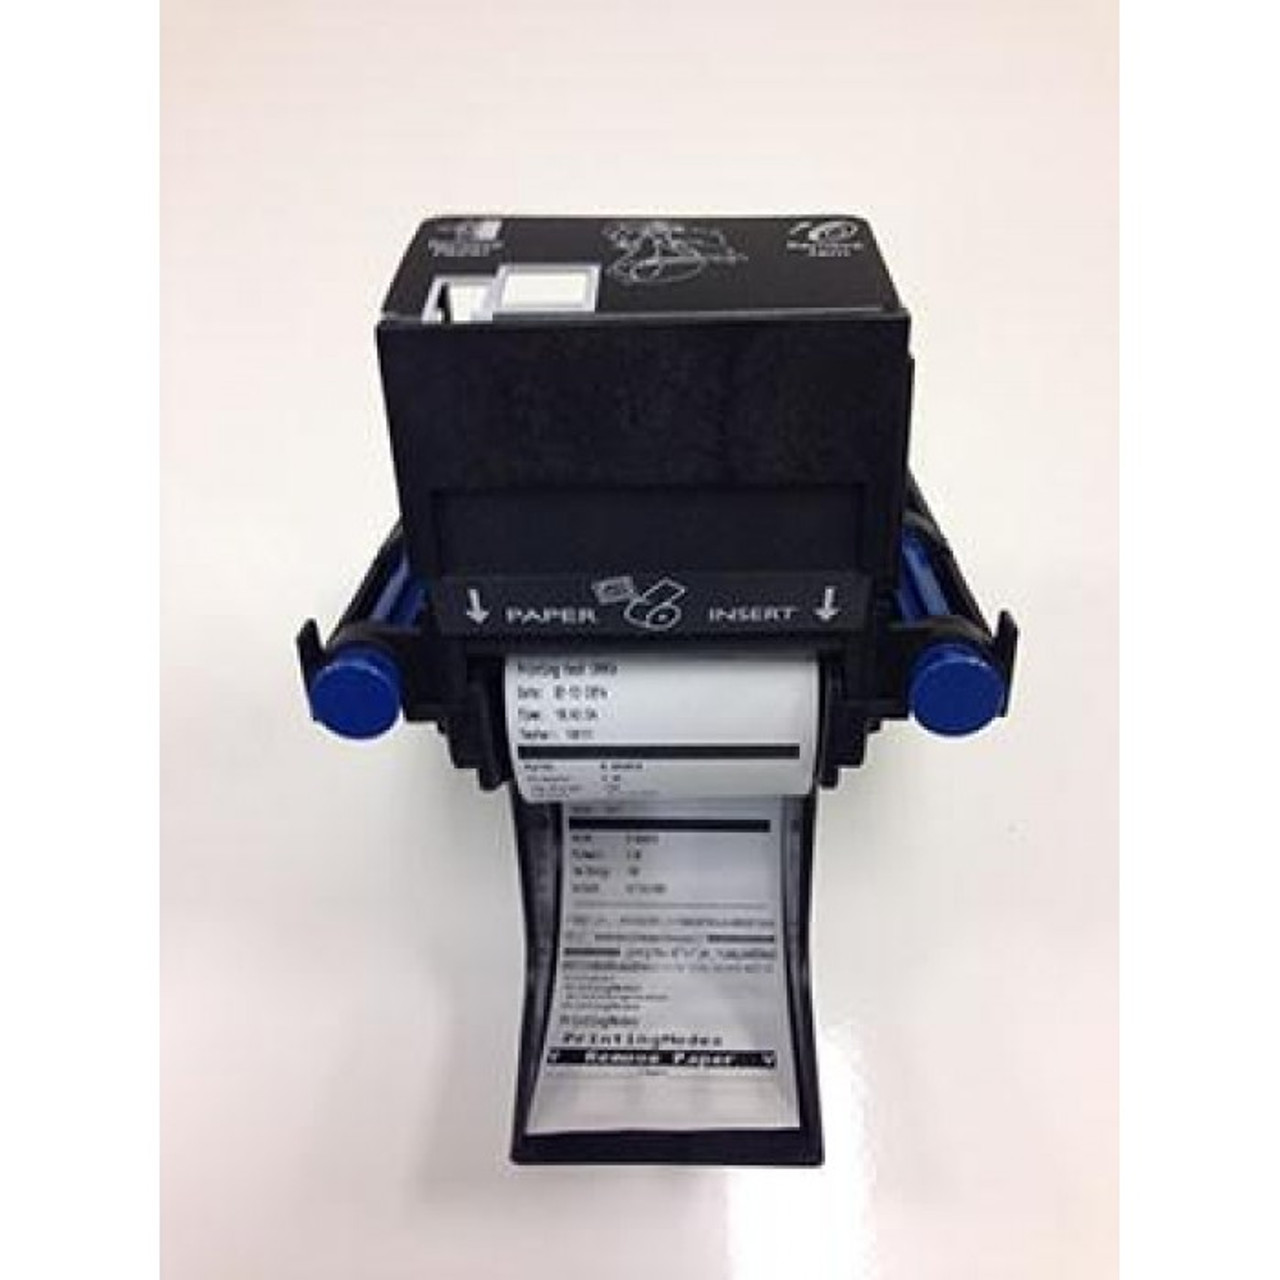 M04119A001 - Encore S Printer - In Pump